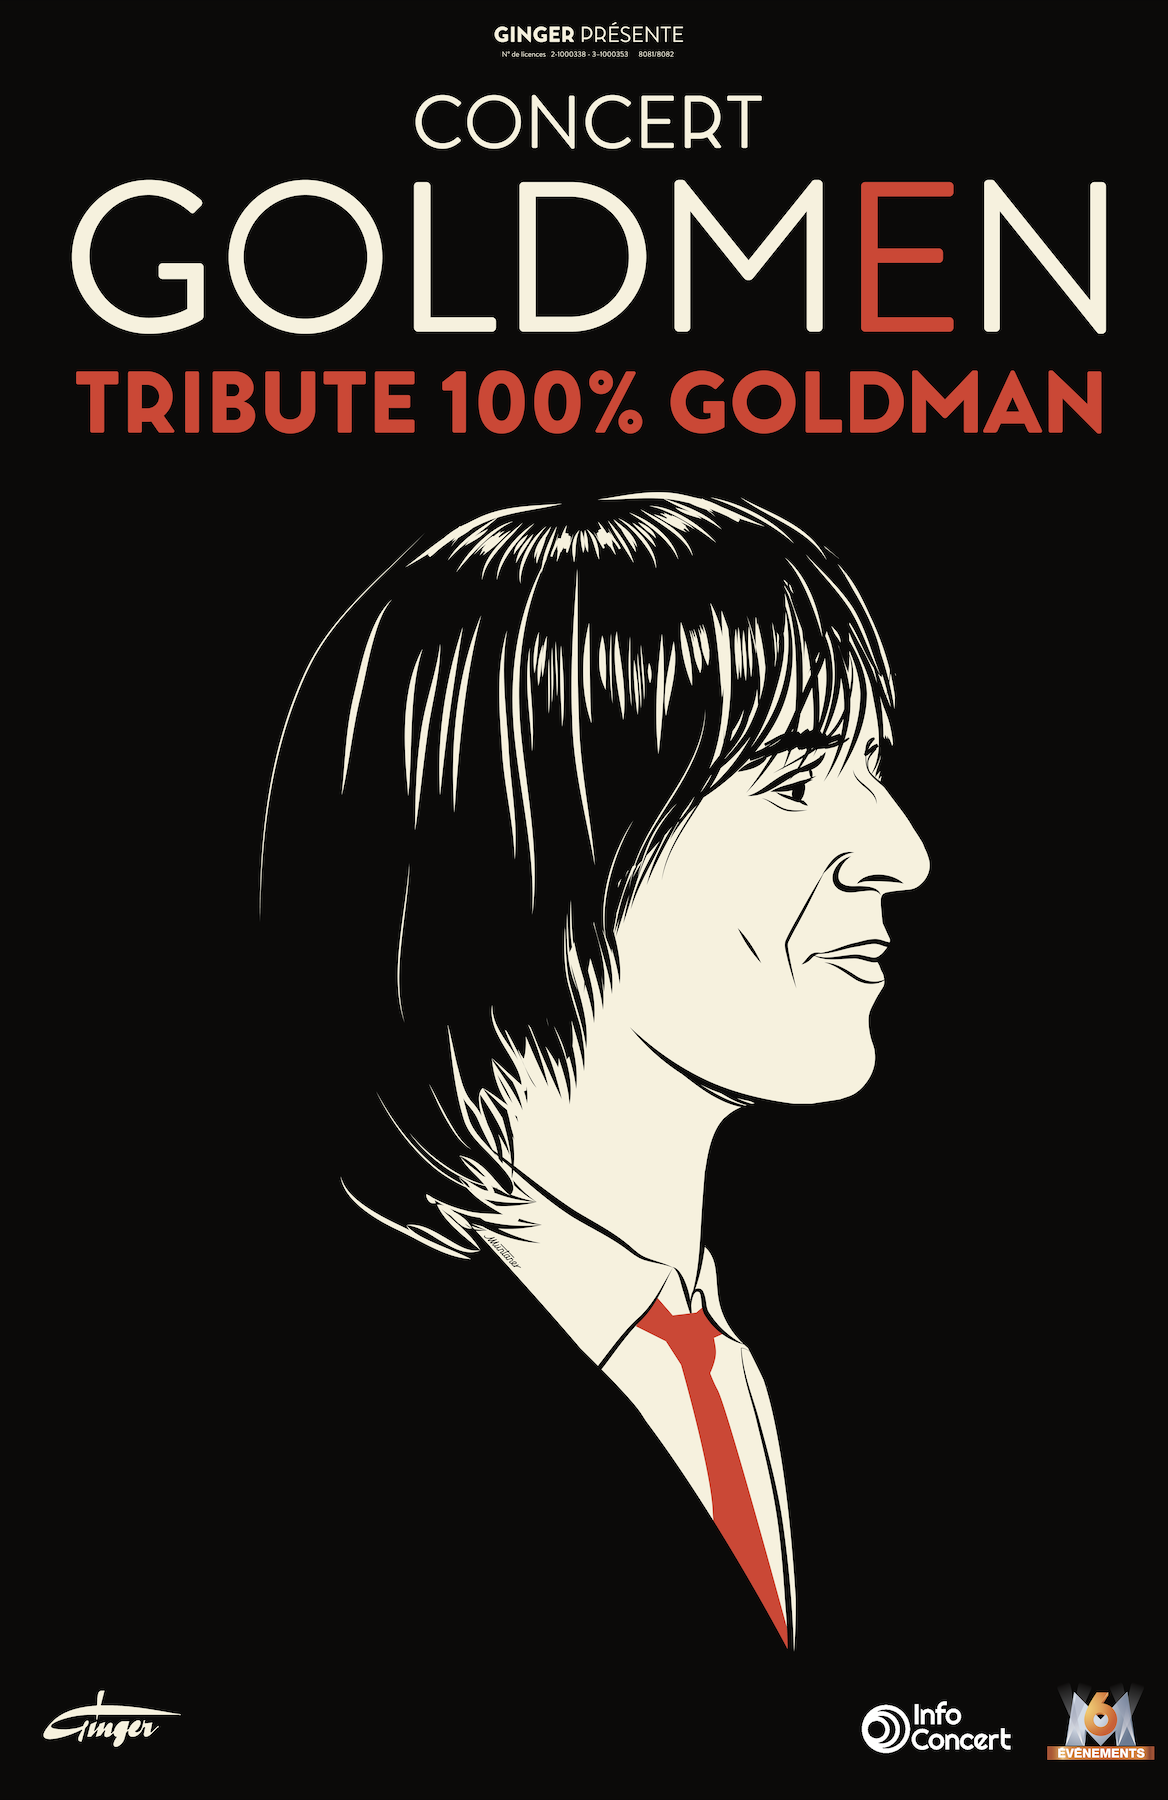 Goldmen Tribute 100 Goldman at Centre des Congres Agen Tickets